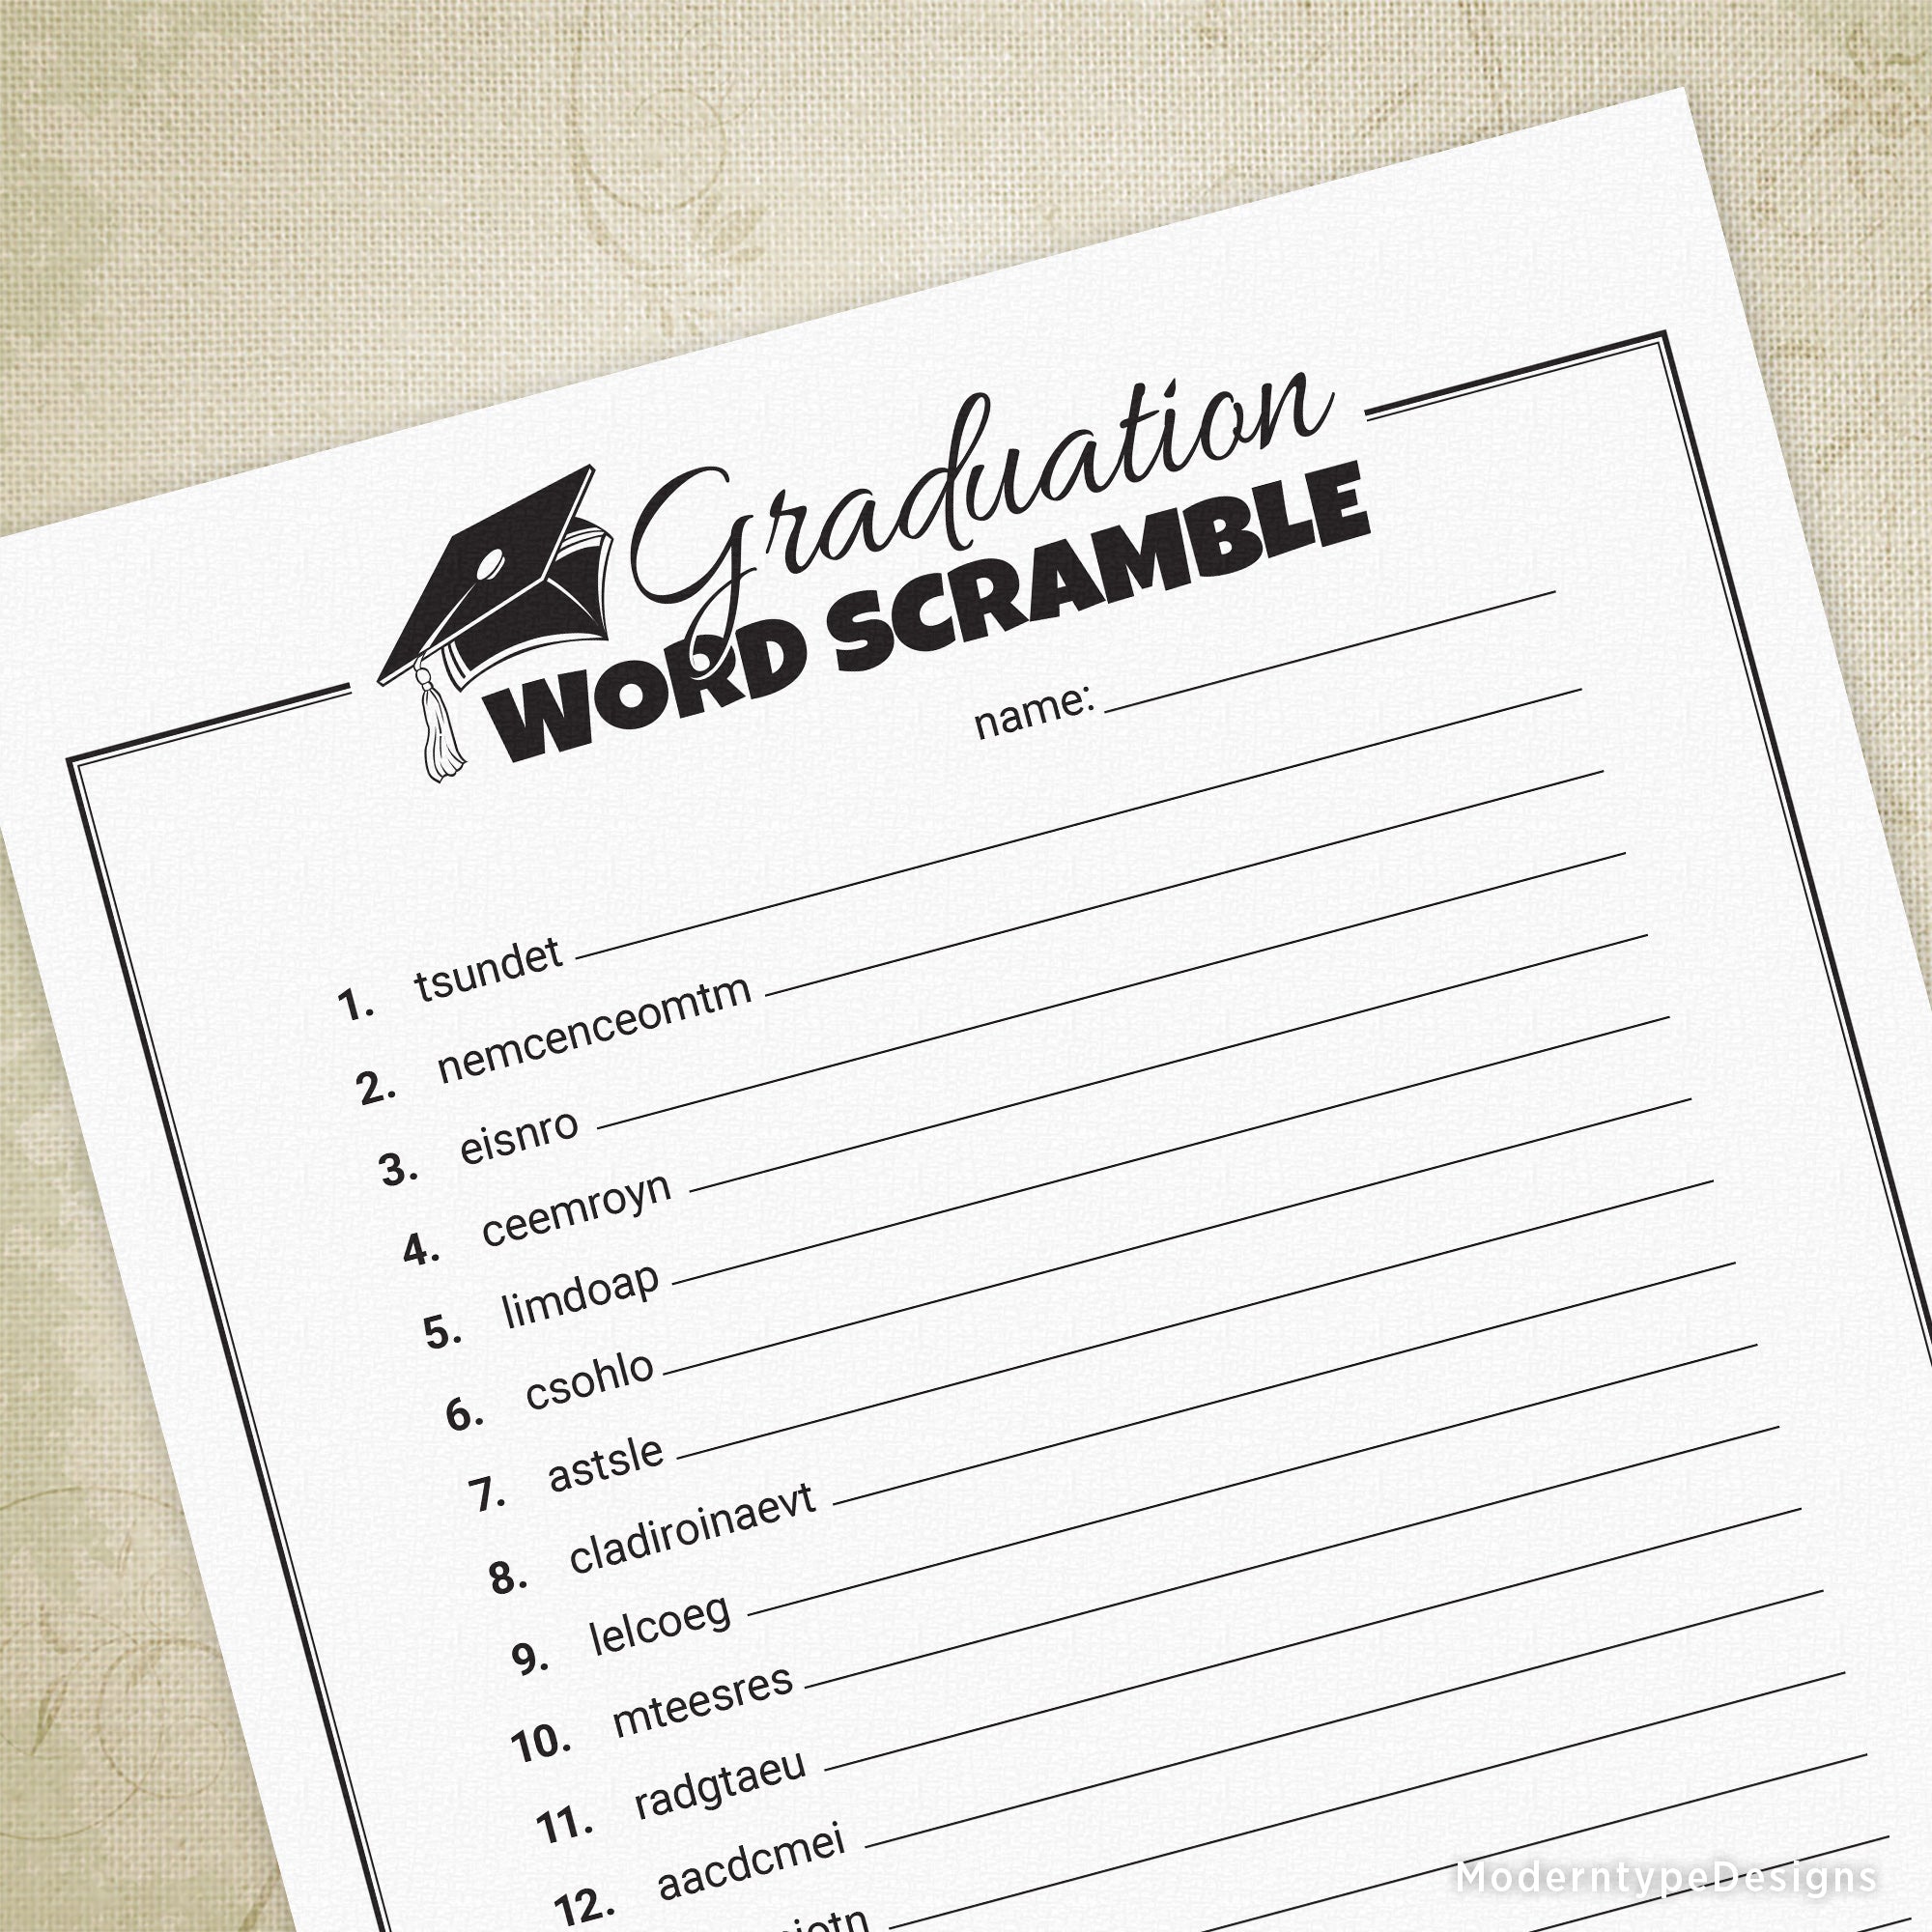 Graduation Word Scramble Printable Game